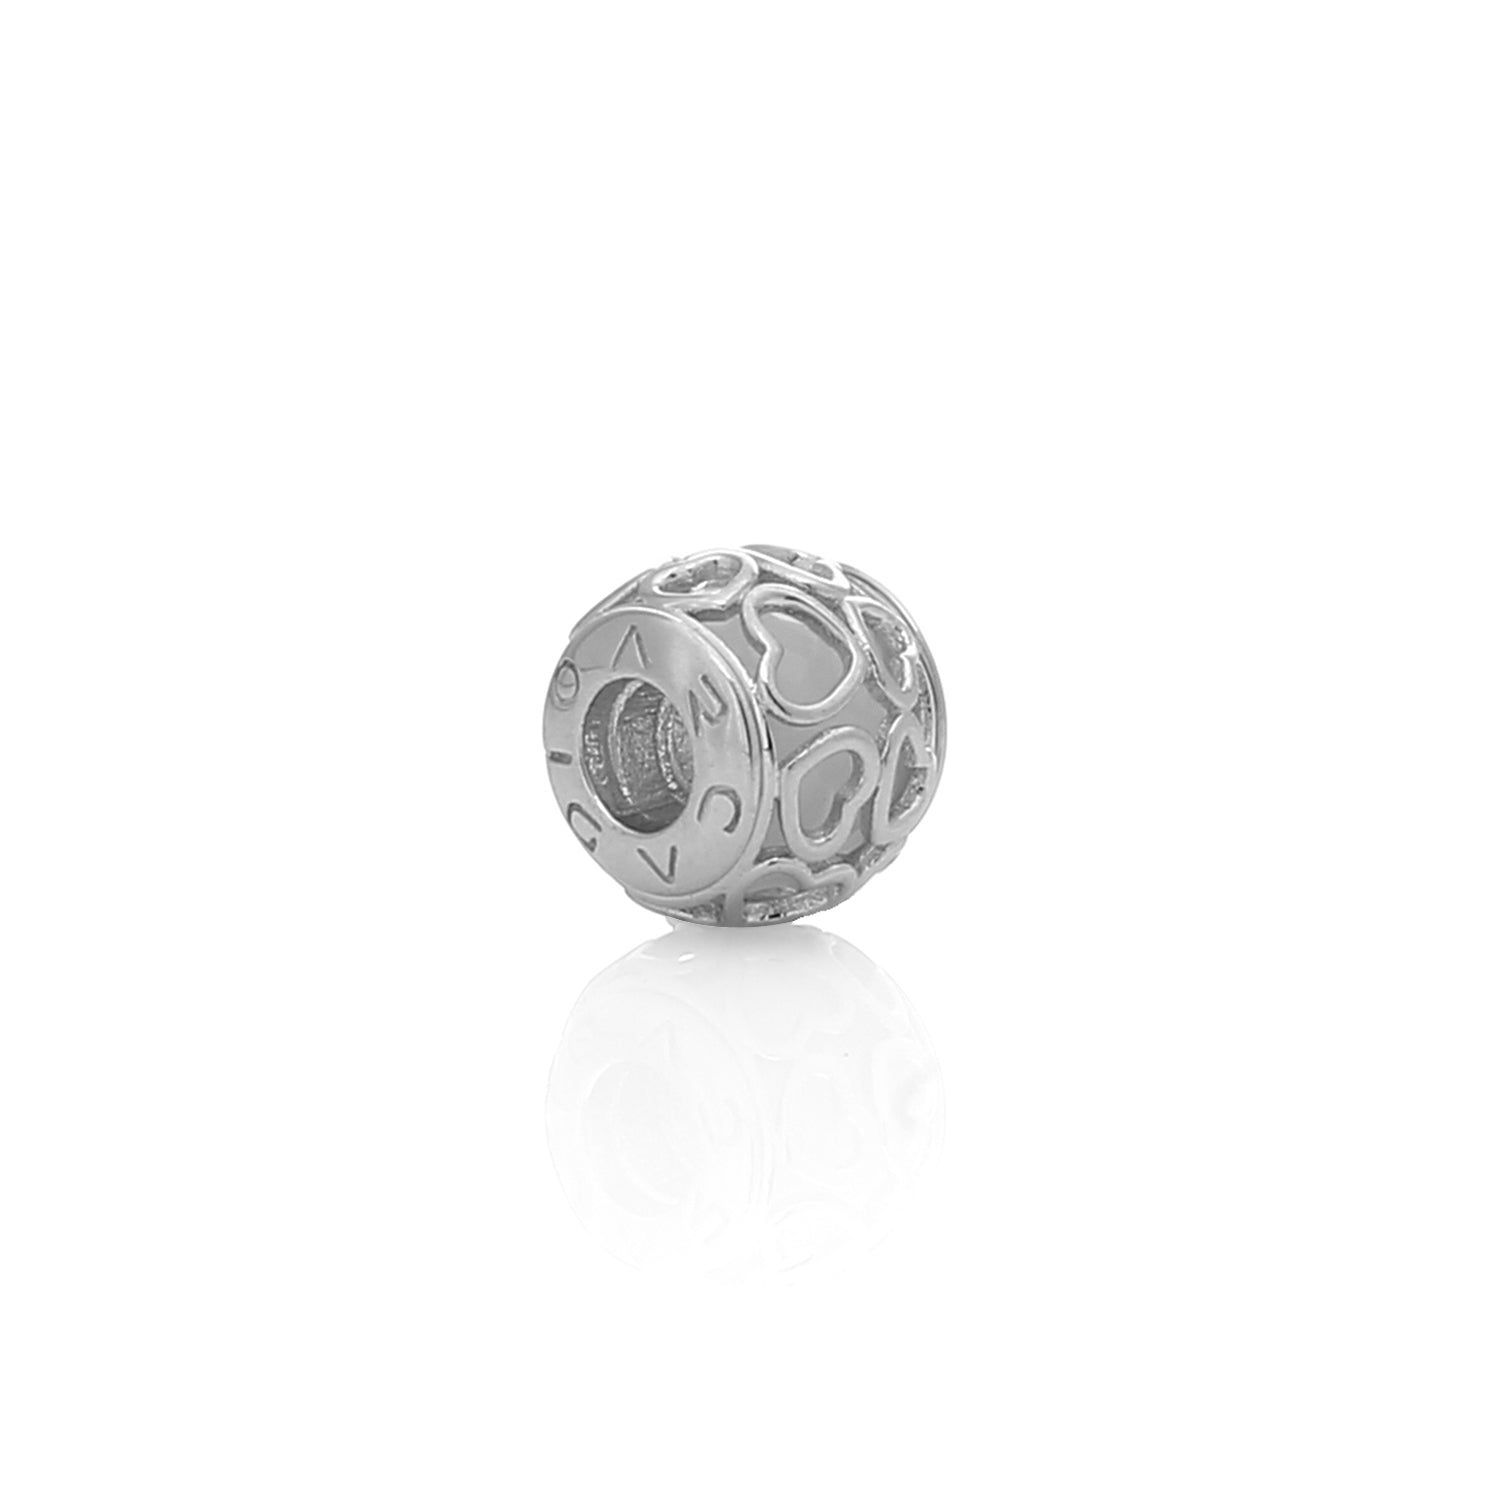 Opalescent Encased in Love Verona Charm - Sterling Silver, Cubic Zirconia Gemstones - ARJWVC1050RD ARCADIO